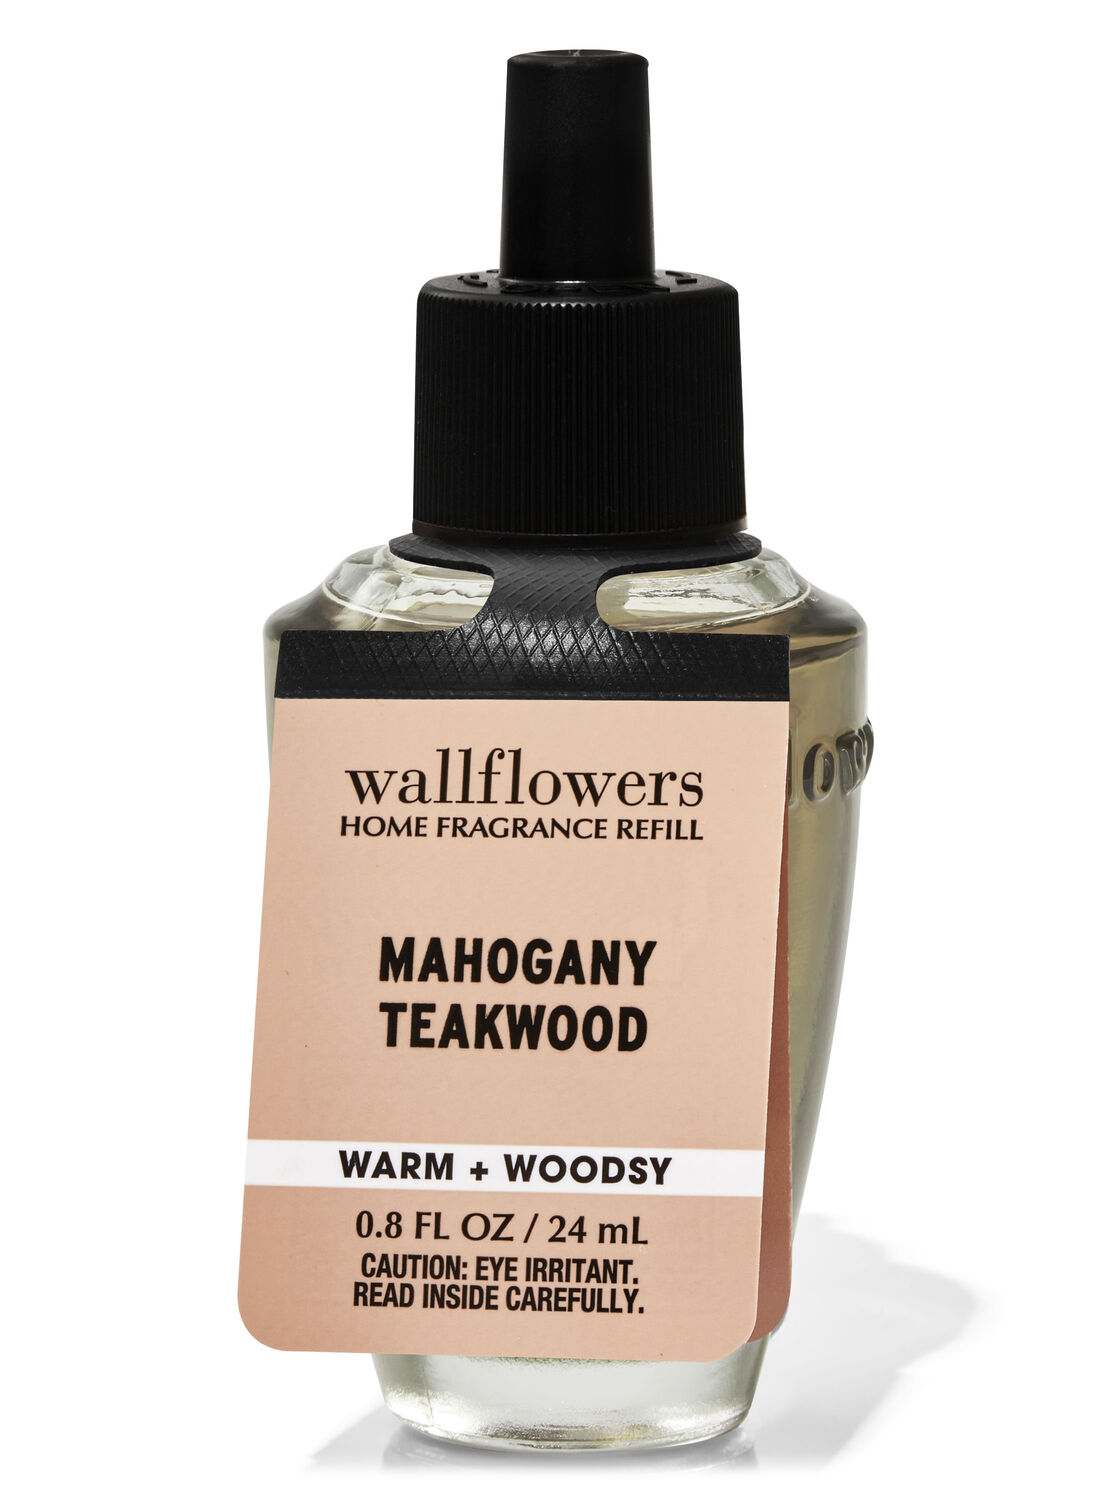 Bath & Body Works Mahogany Teakwood Wallflowers Fragrance Refill